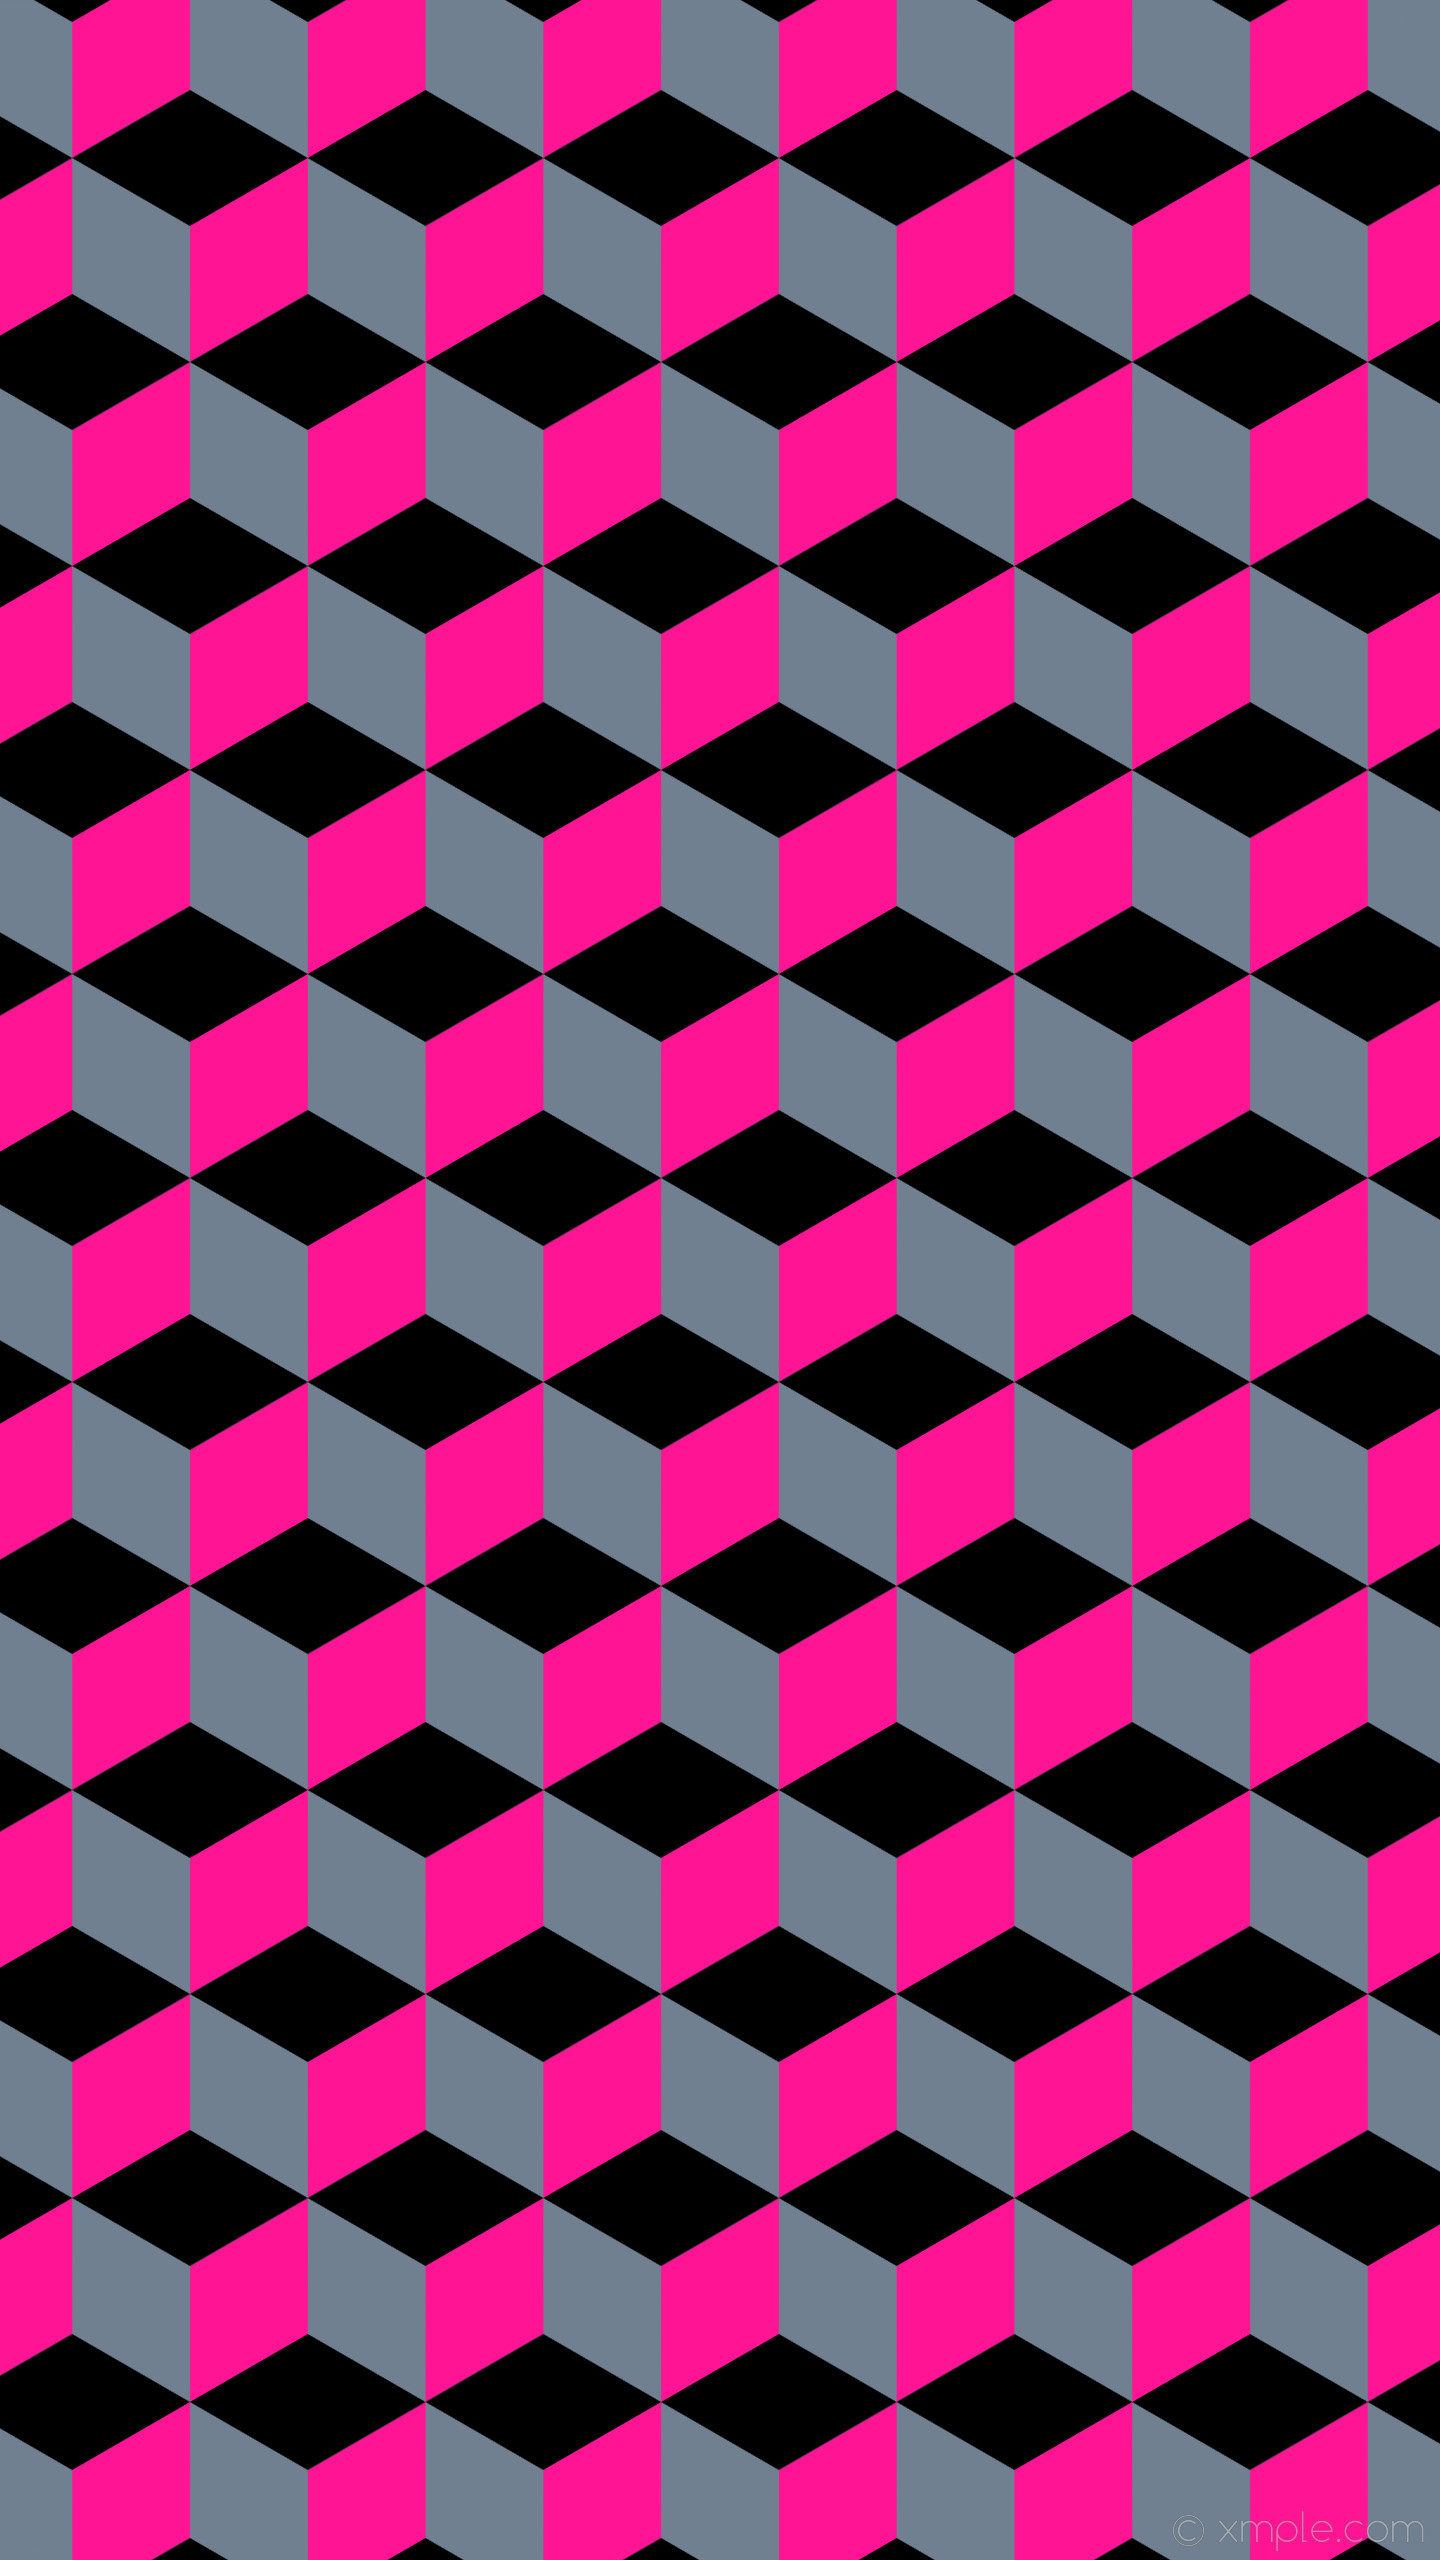 1440x2560 wallpaper pink black 3d cubes grey slate gray deep pink #708090 #ff1493  #000000